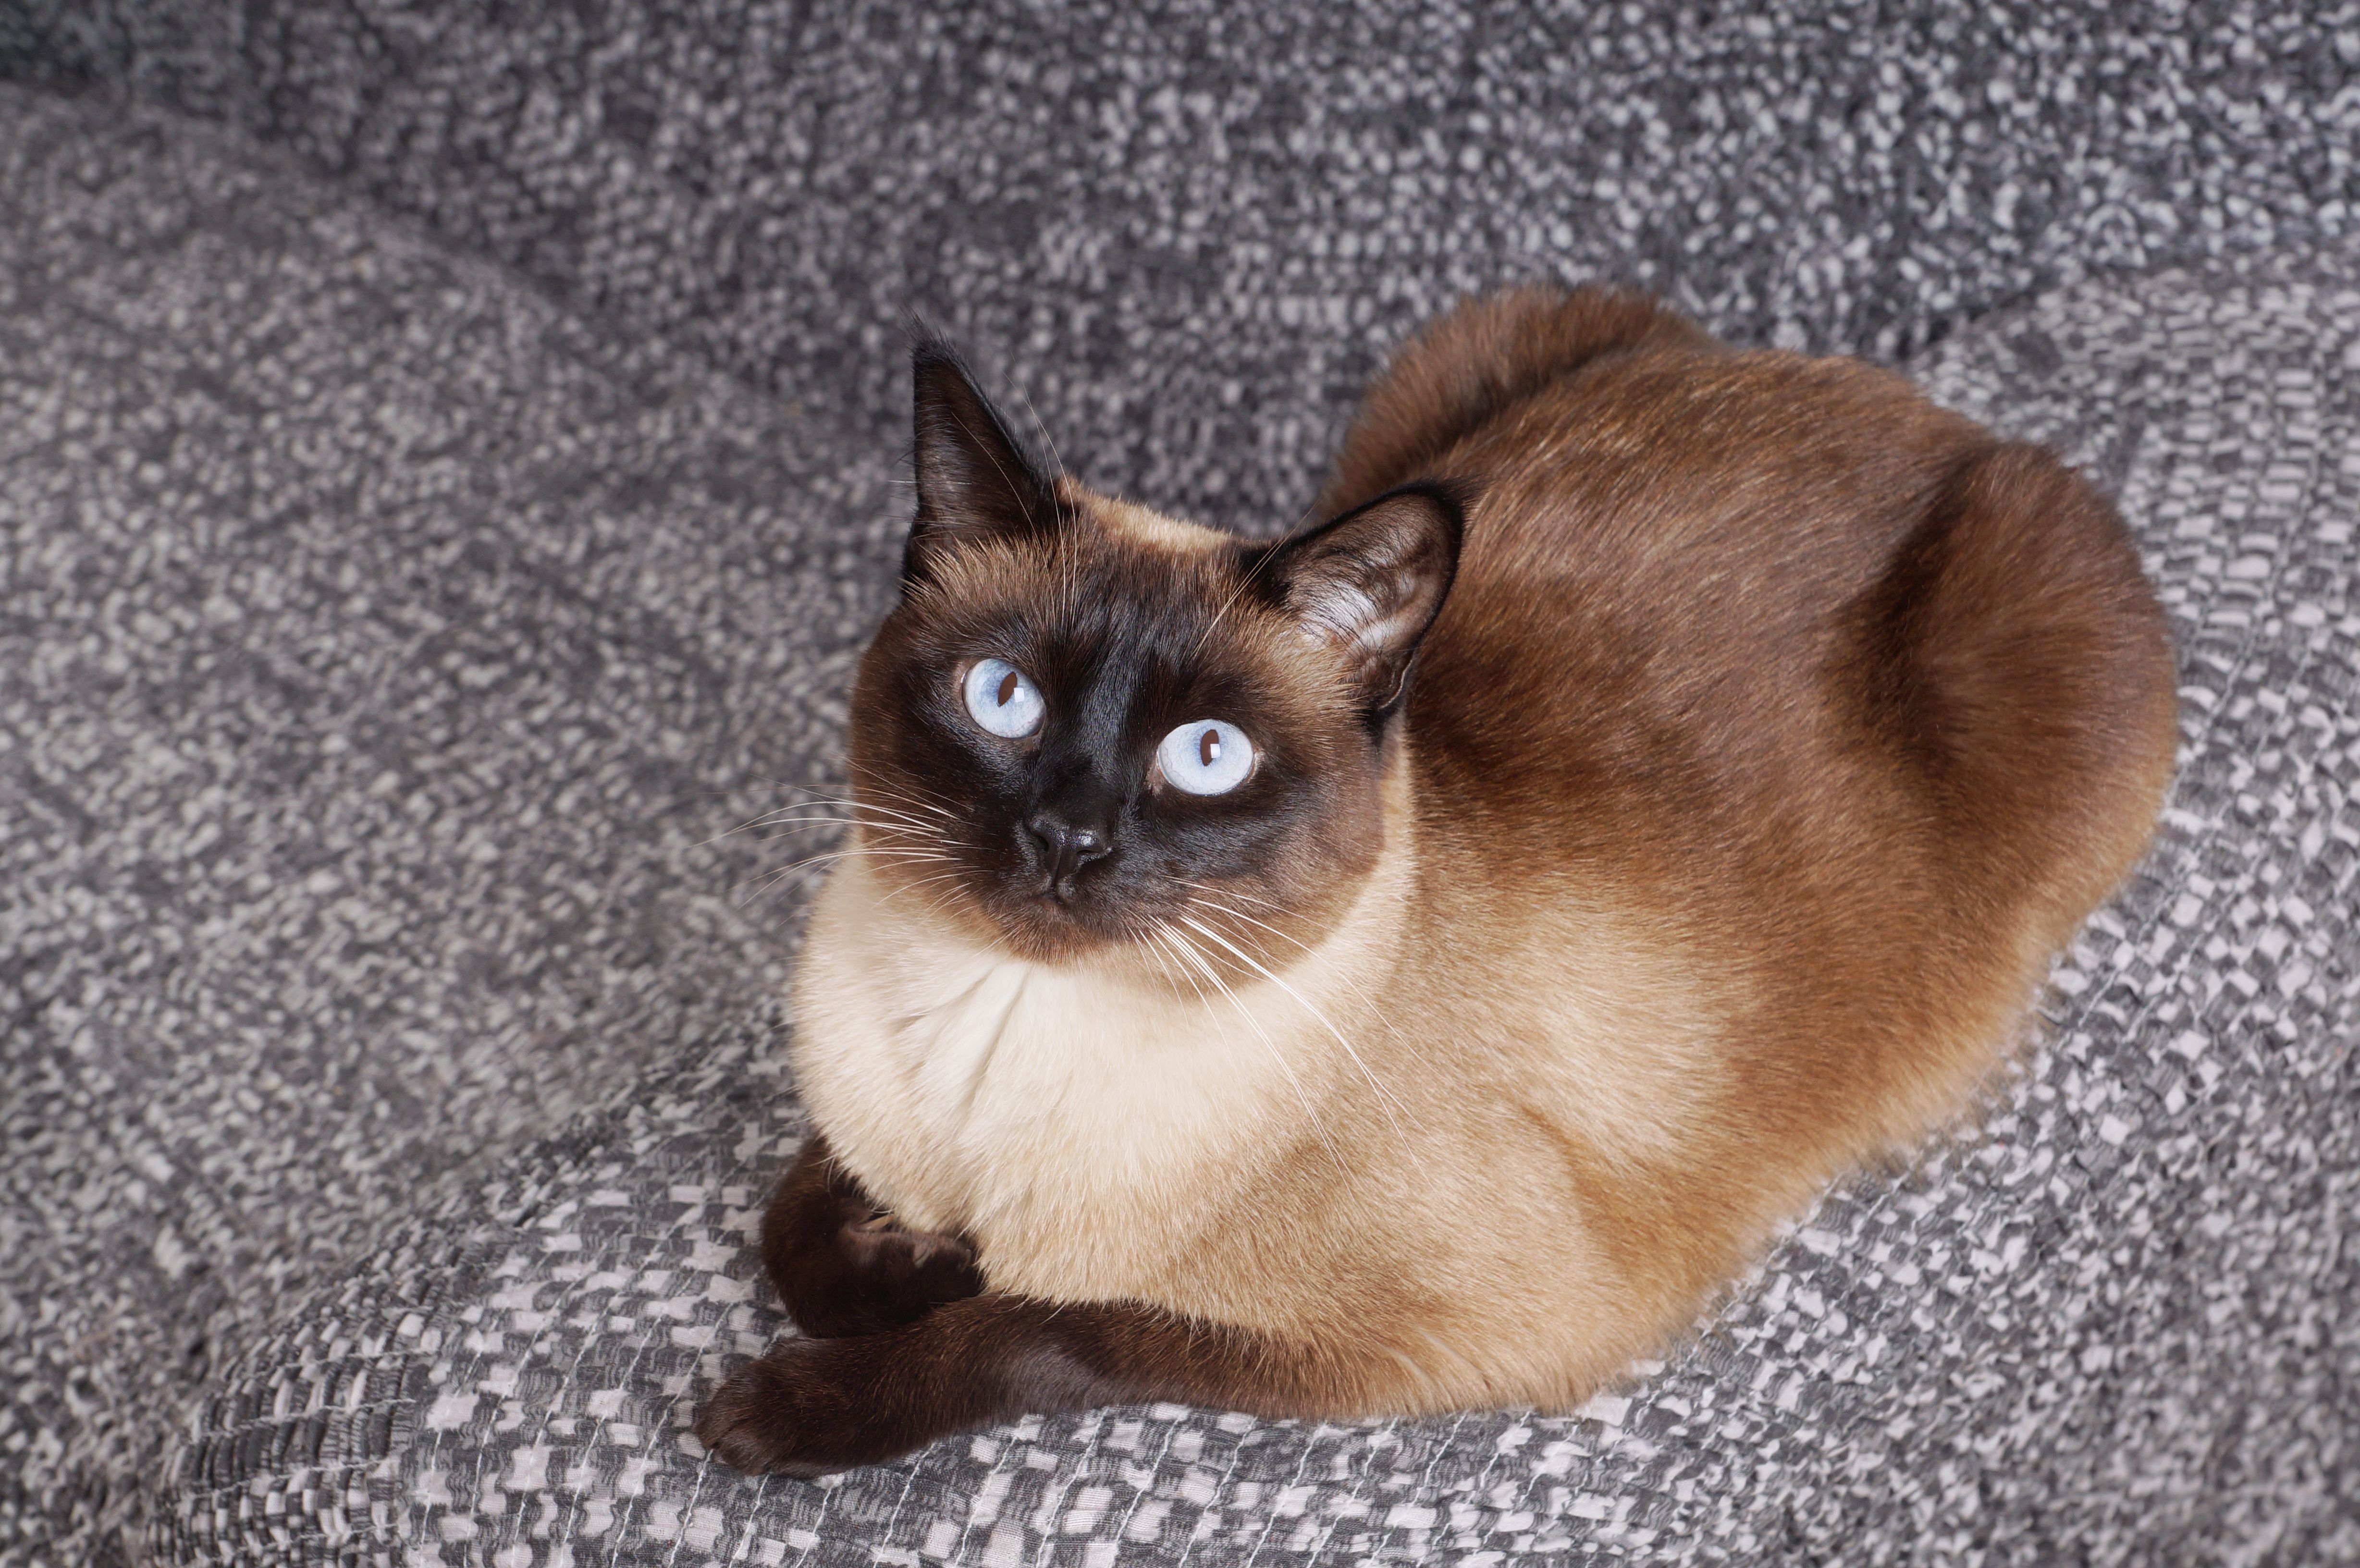 Portrait of a Siamese cat